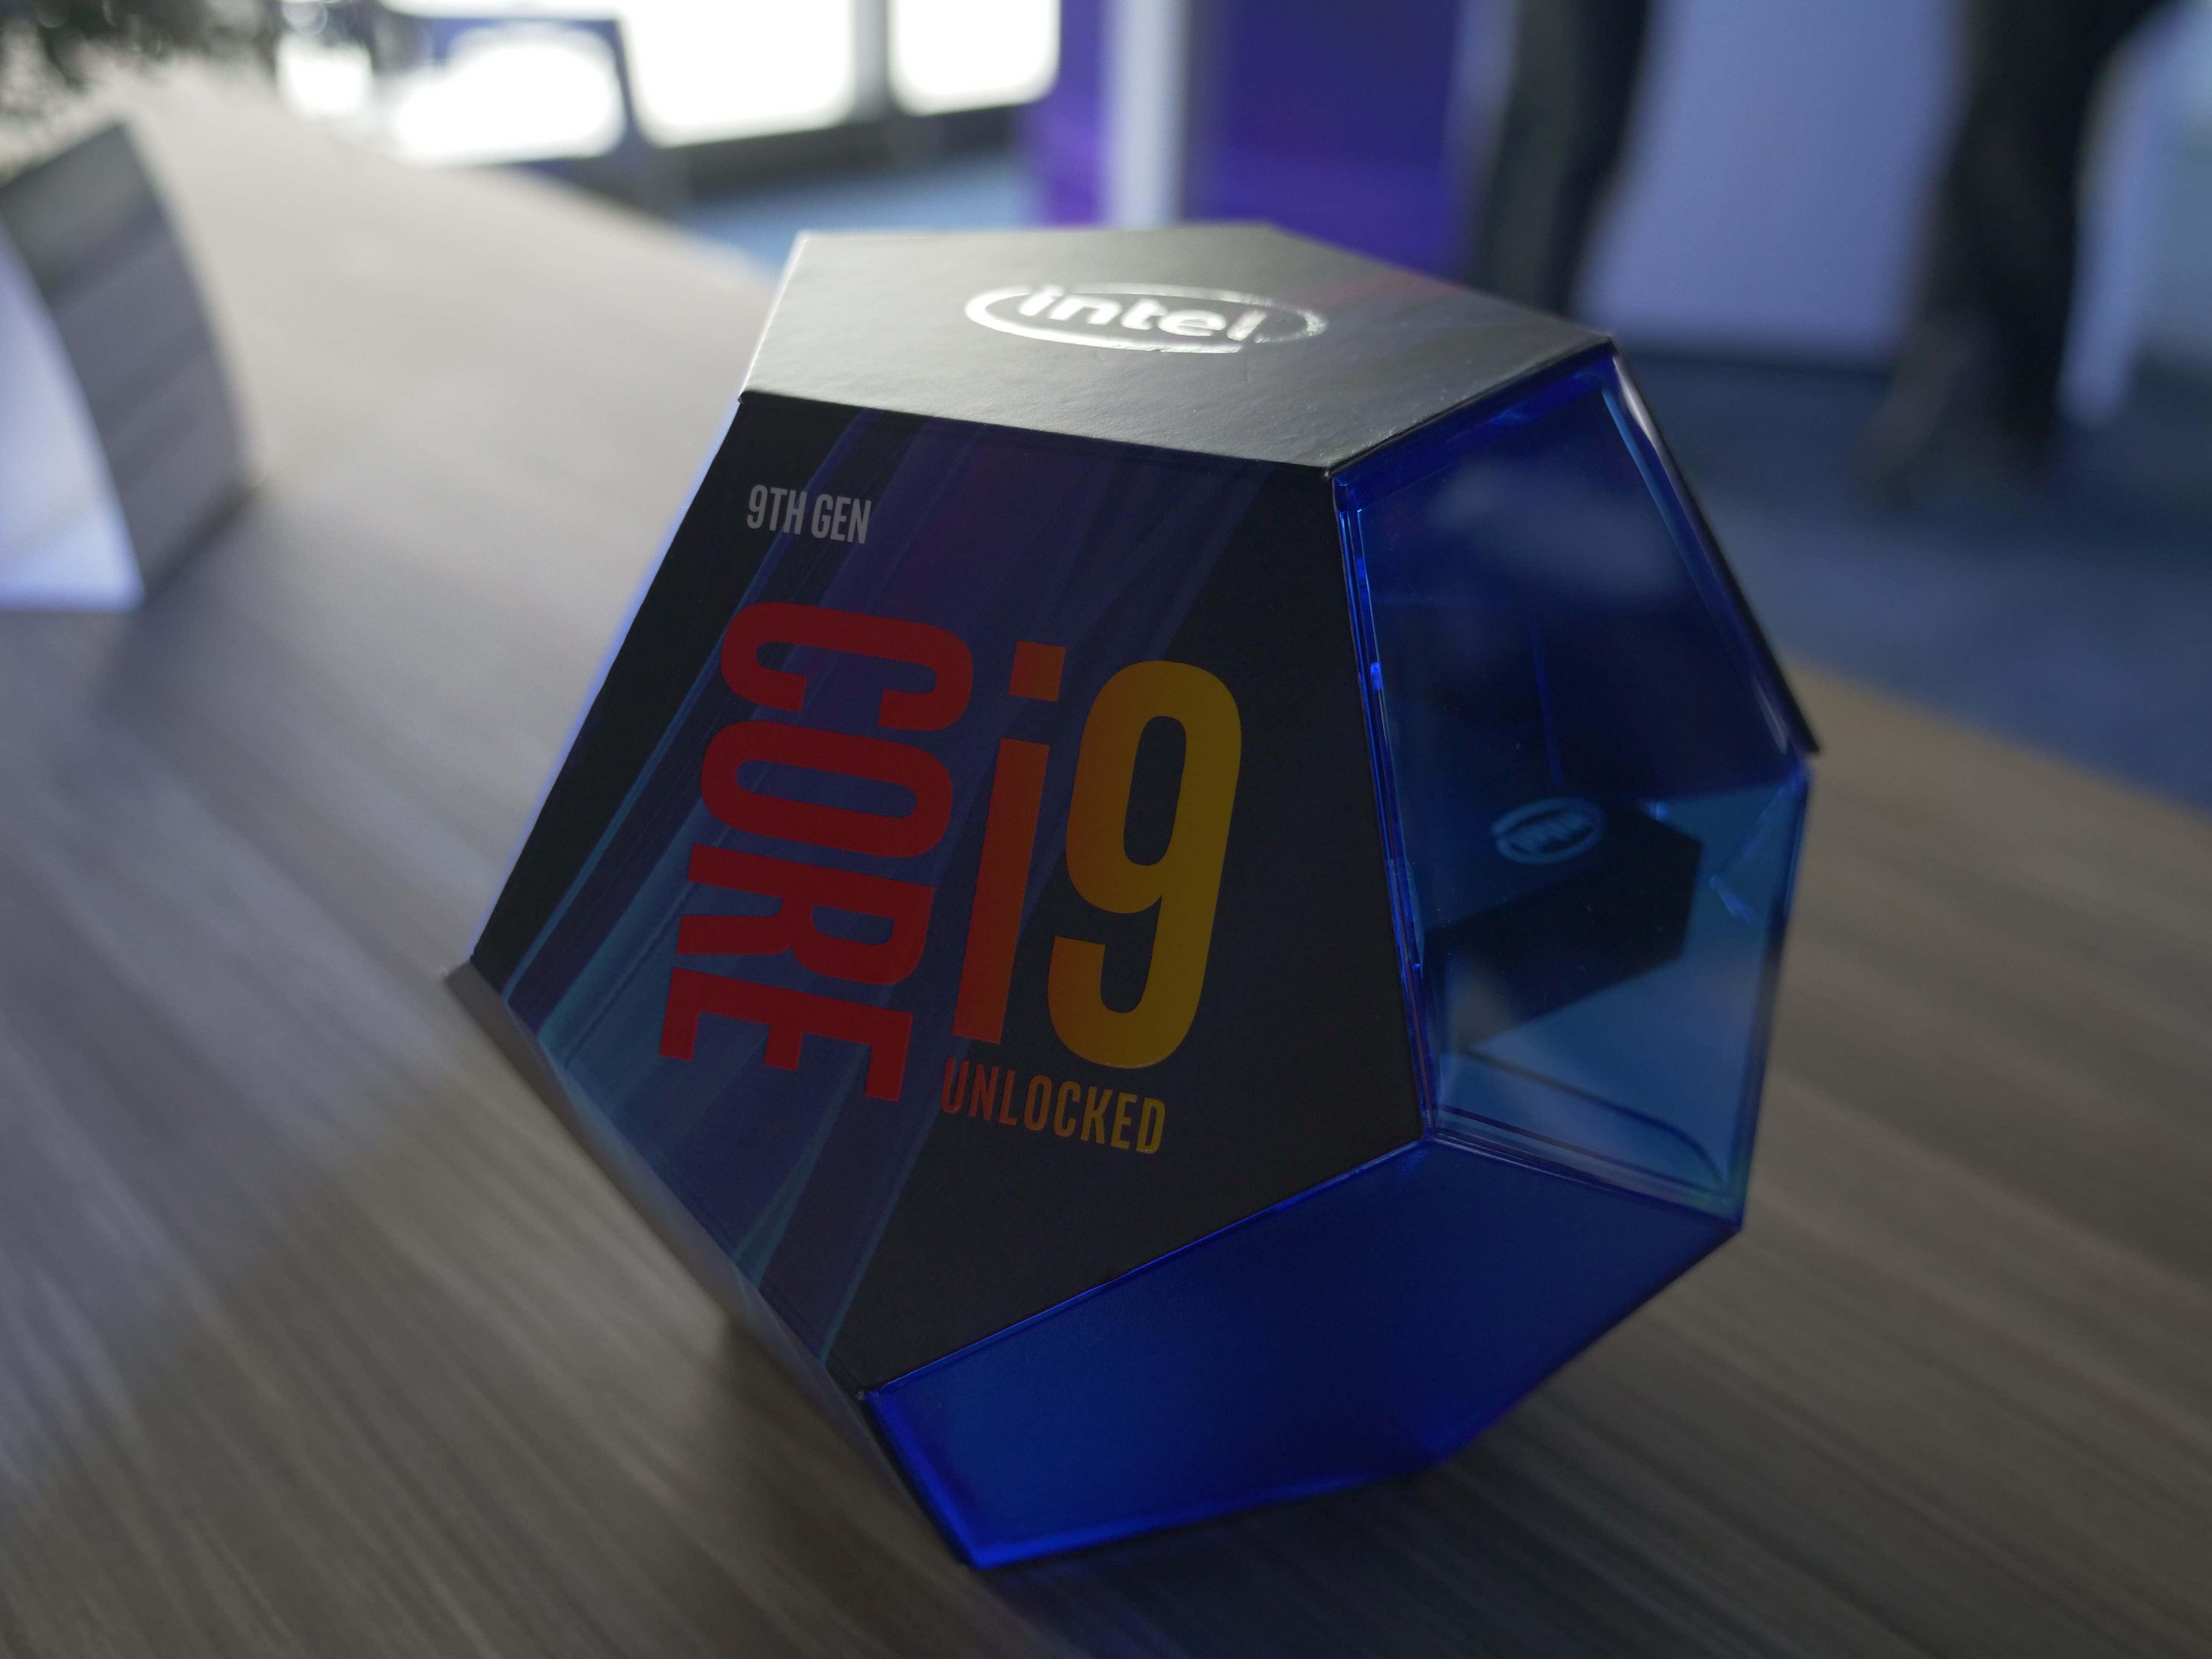 Press criticises Intel for misleading comparisons between Core i9